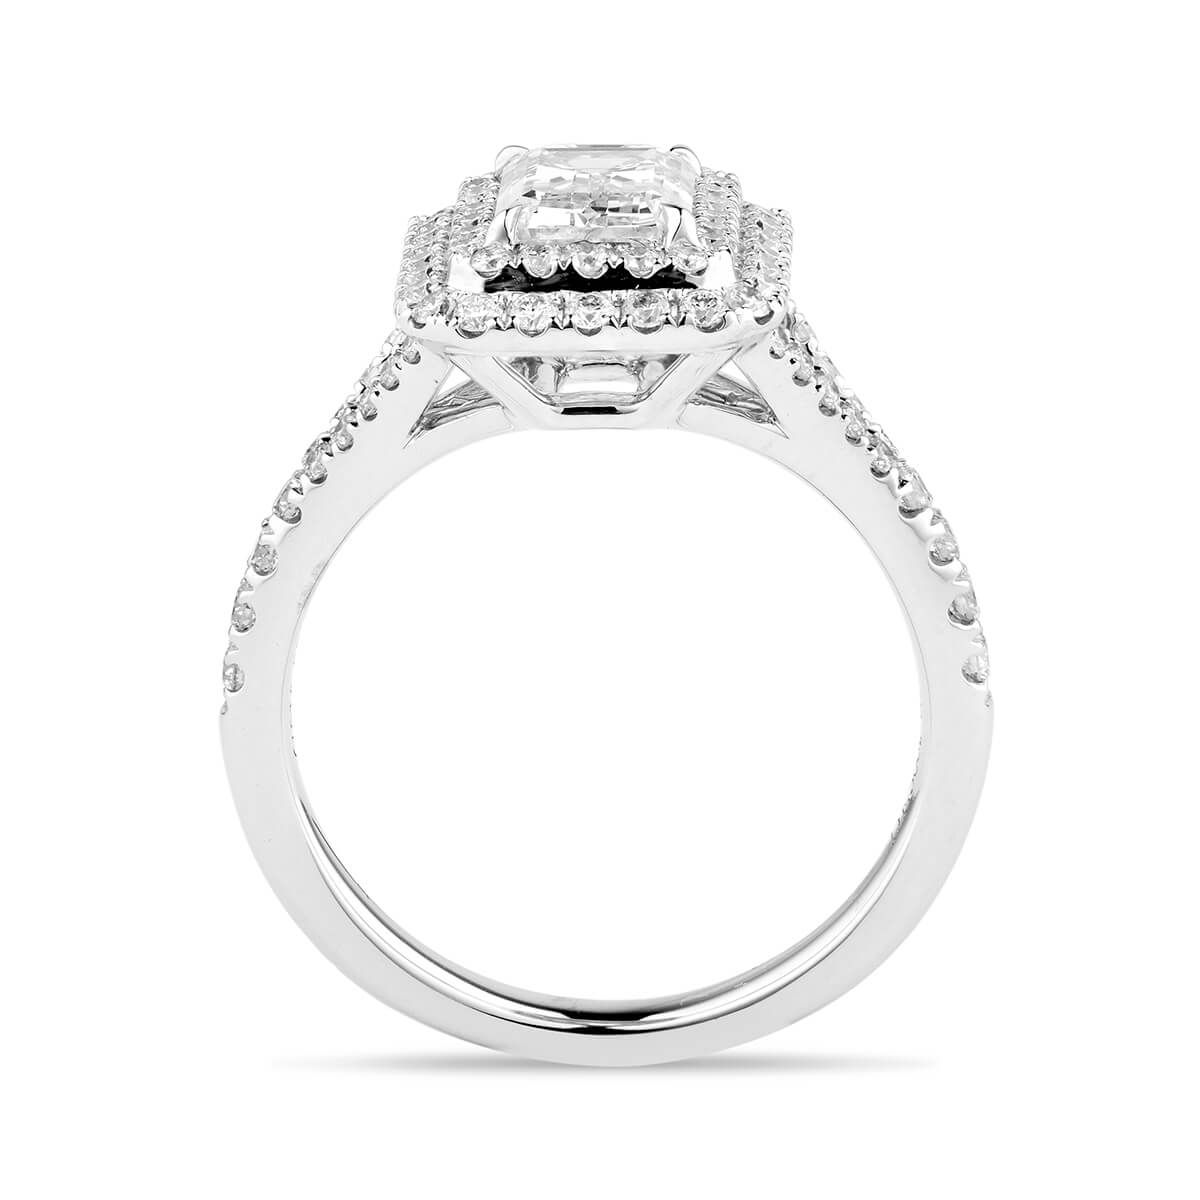  White Diamond Ring, 2.11 Ct. TW, Emerald shape, EGL IL Certified, EGLOO10370333